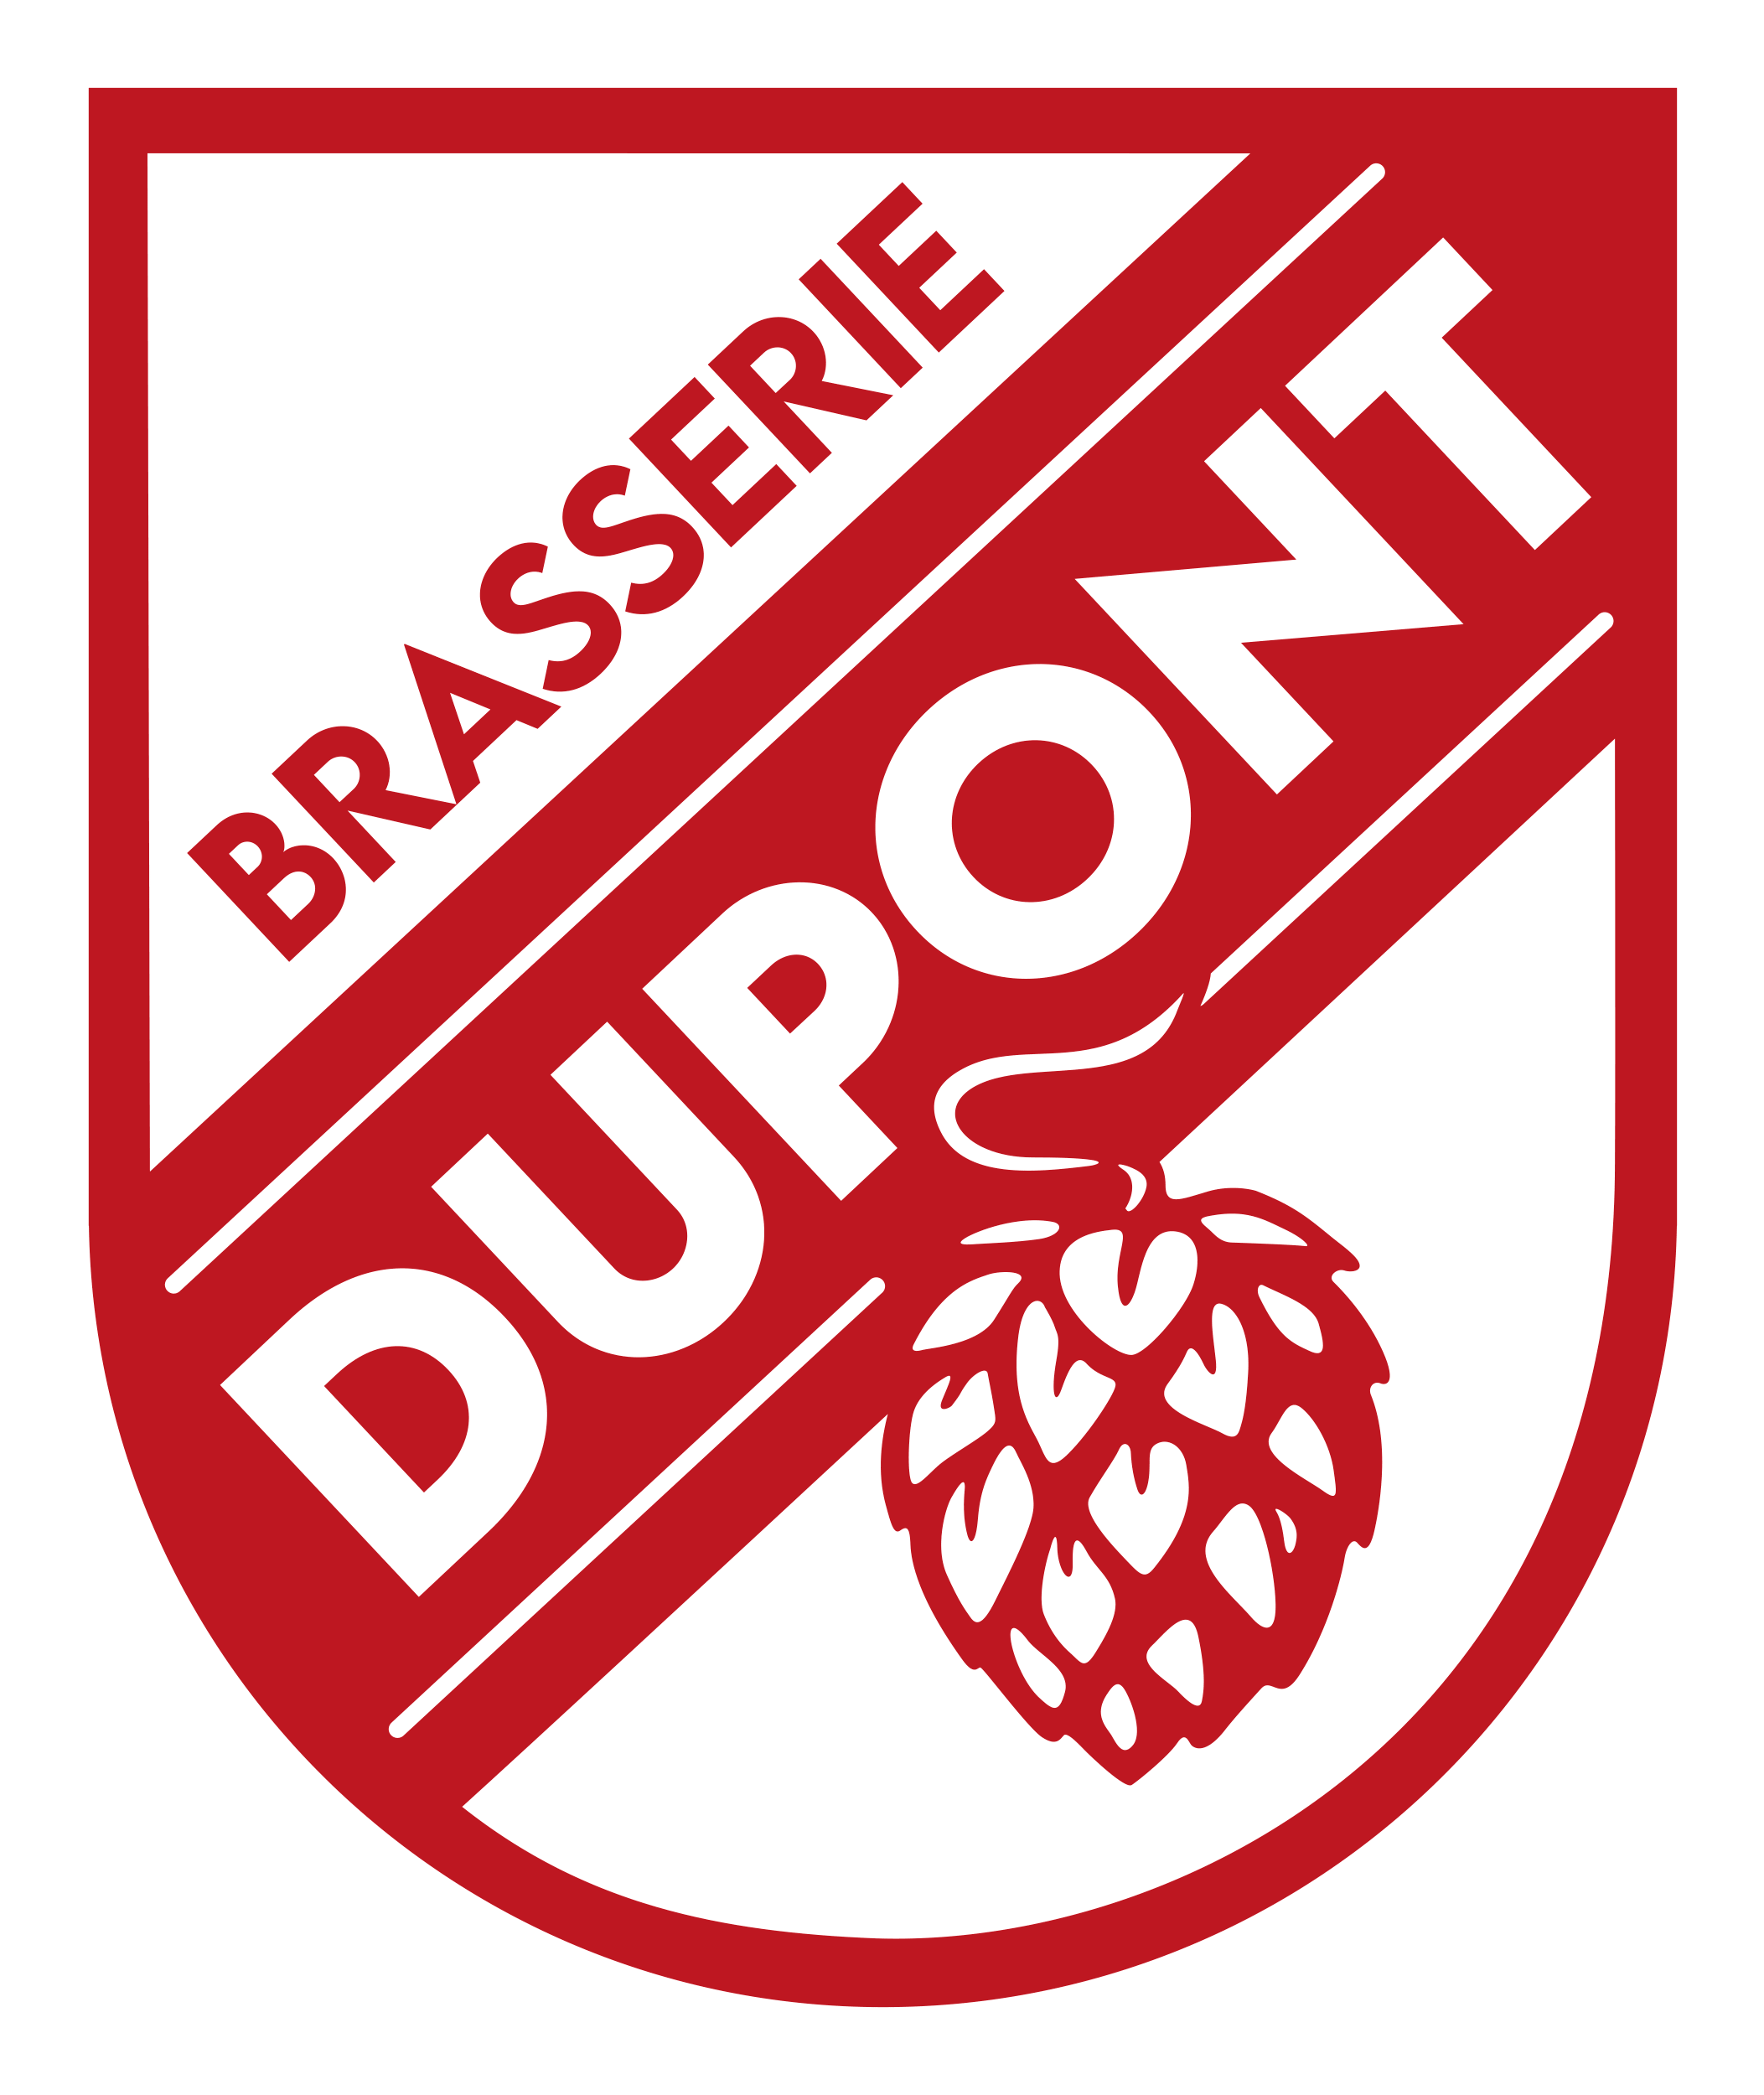 Brasserie Dupont